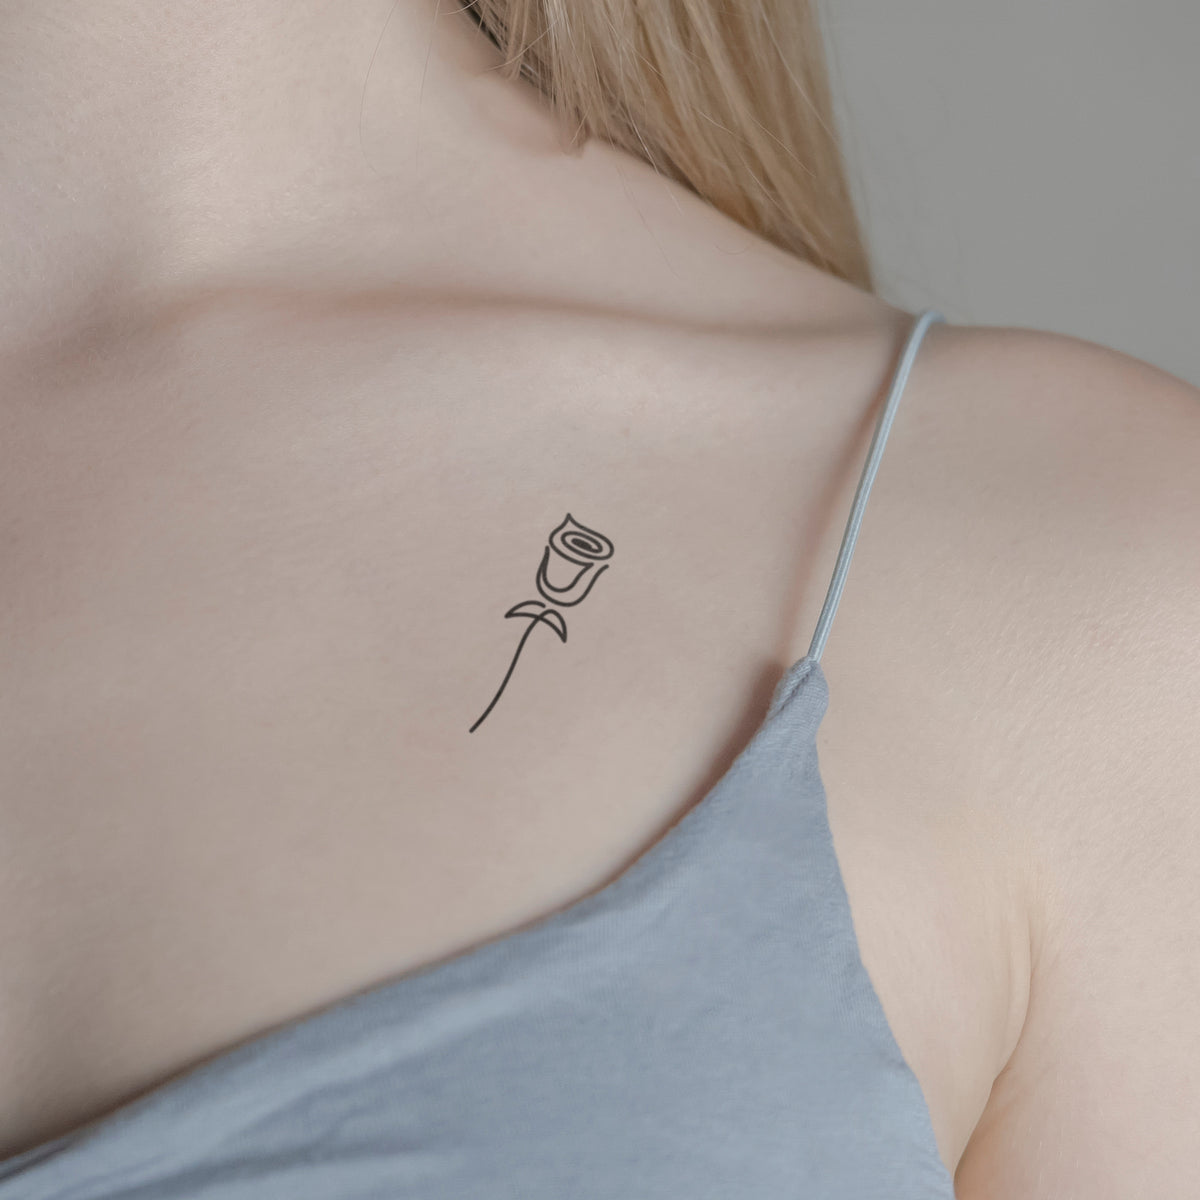 Rose with stem | Temporary tattoos - minink